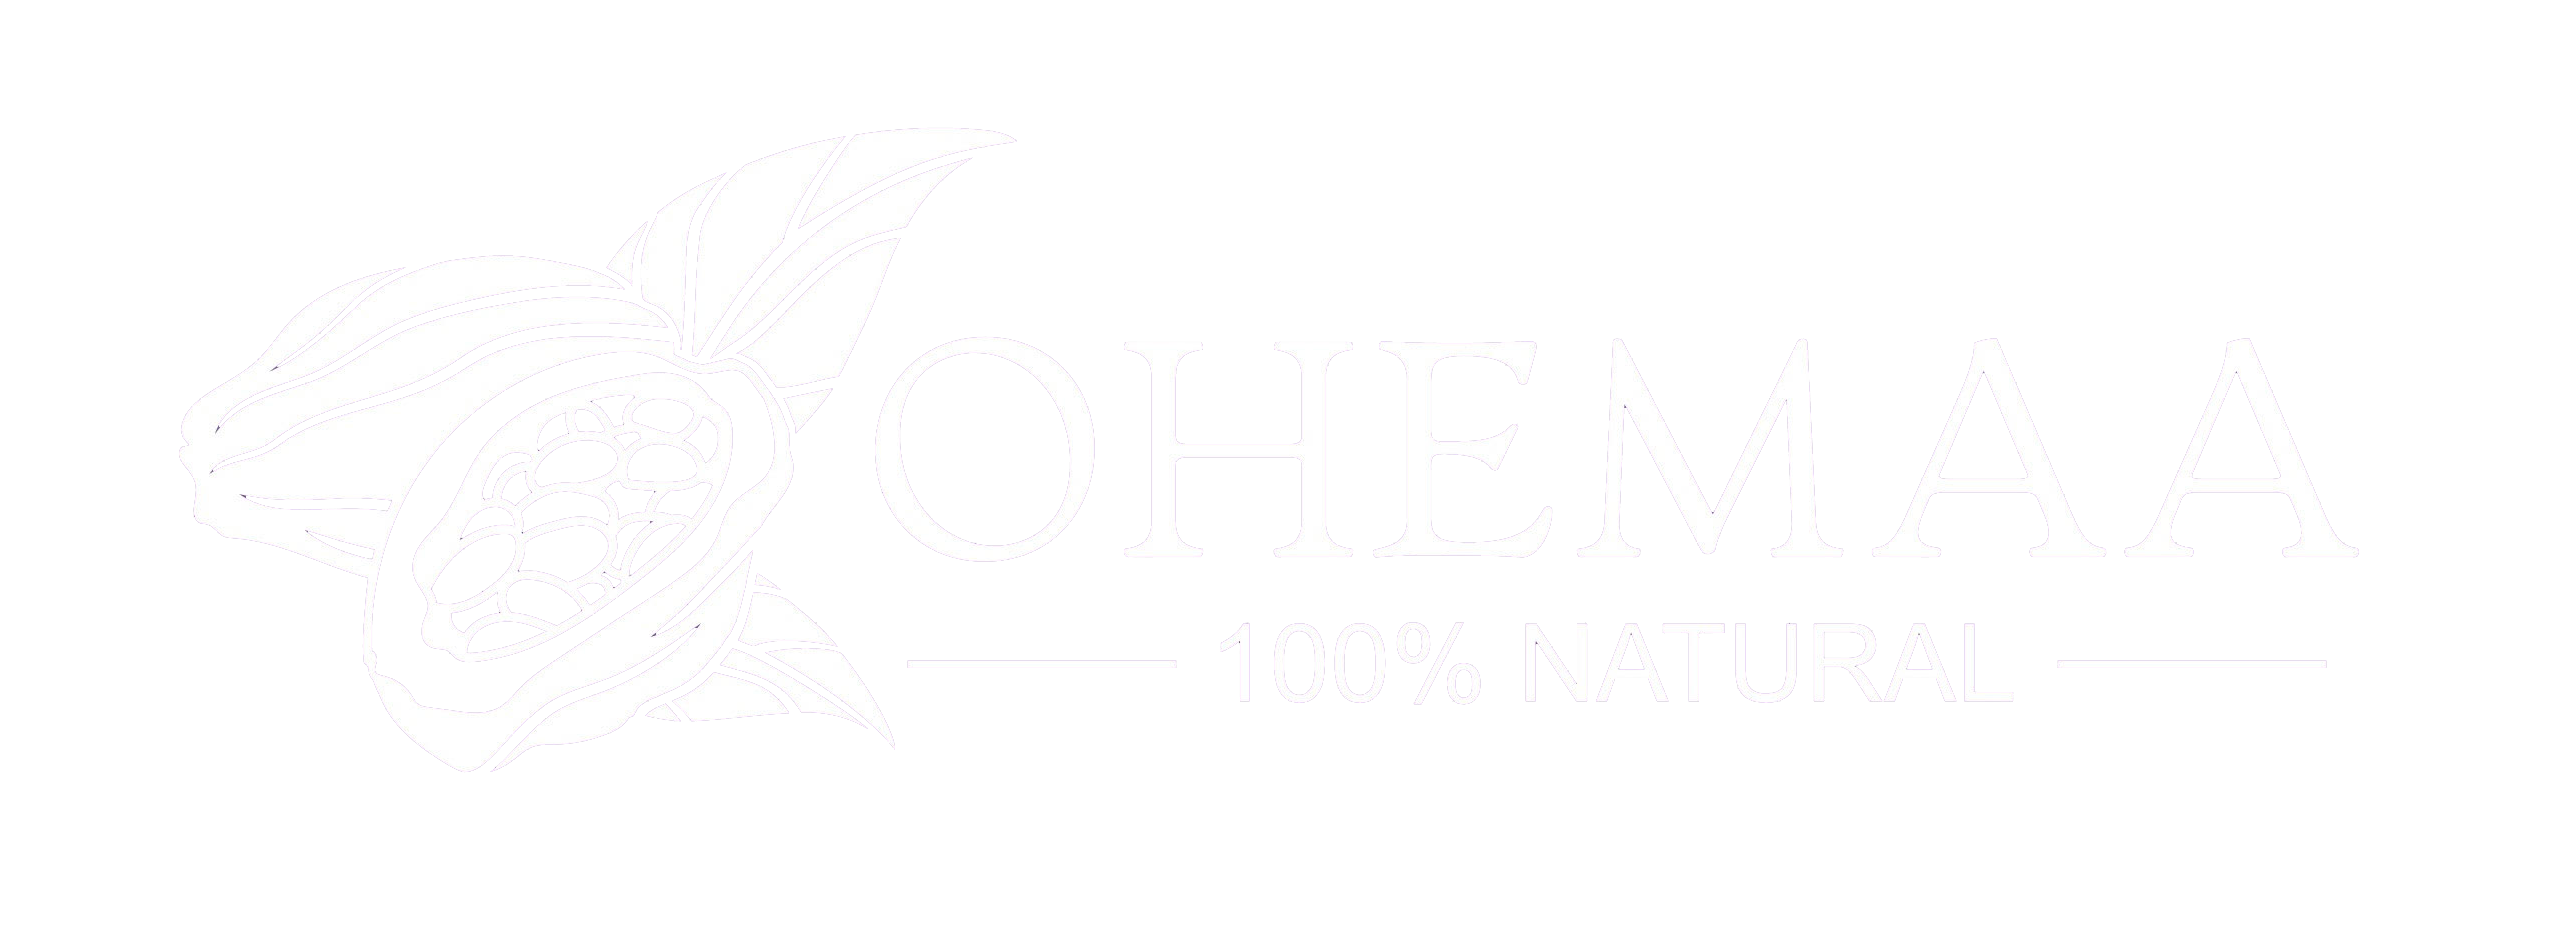 Ohemaa Logo